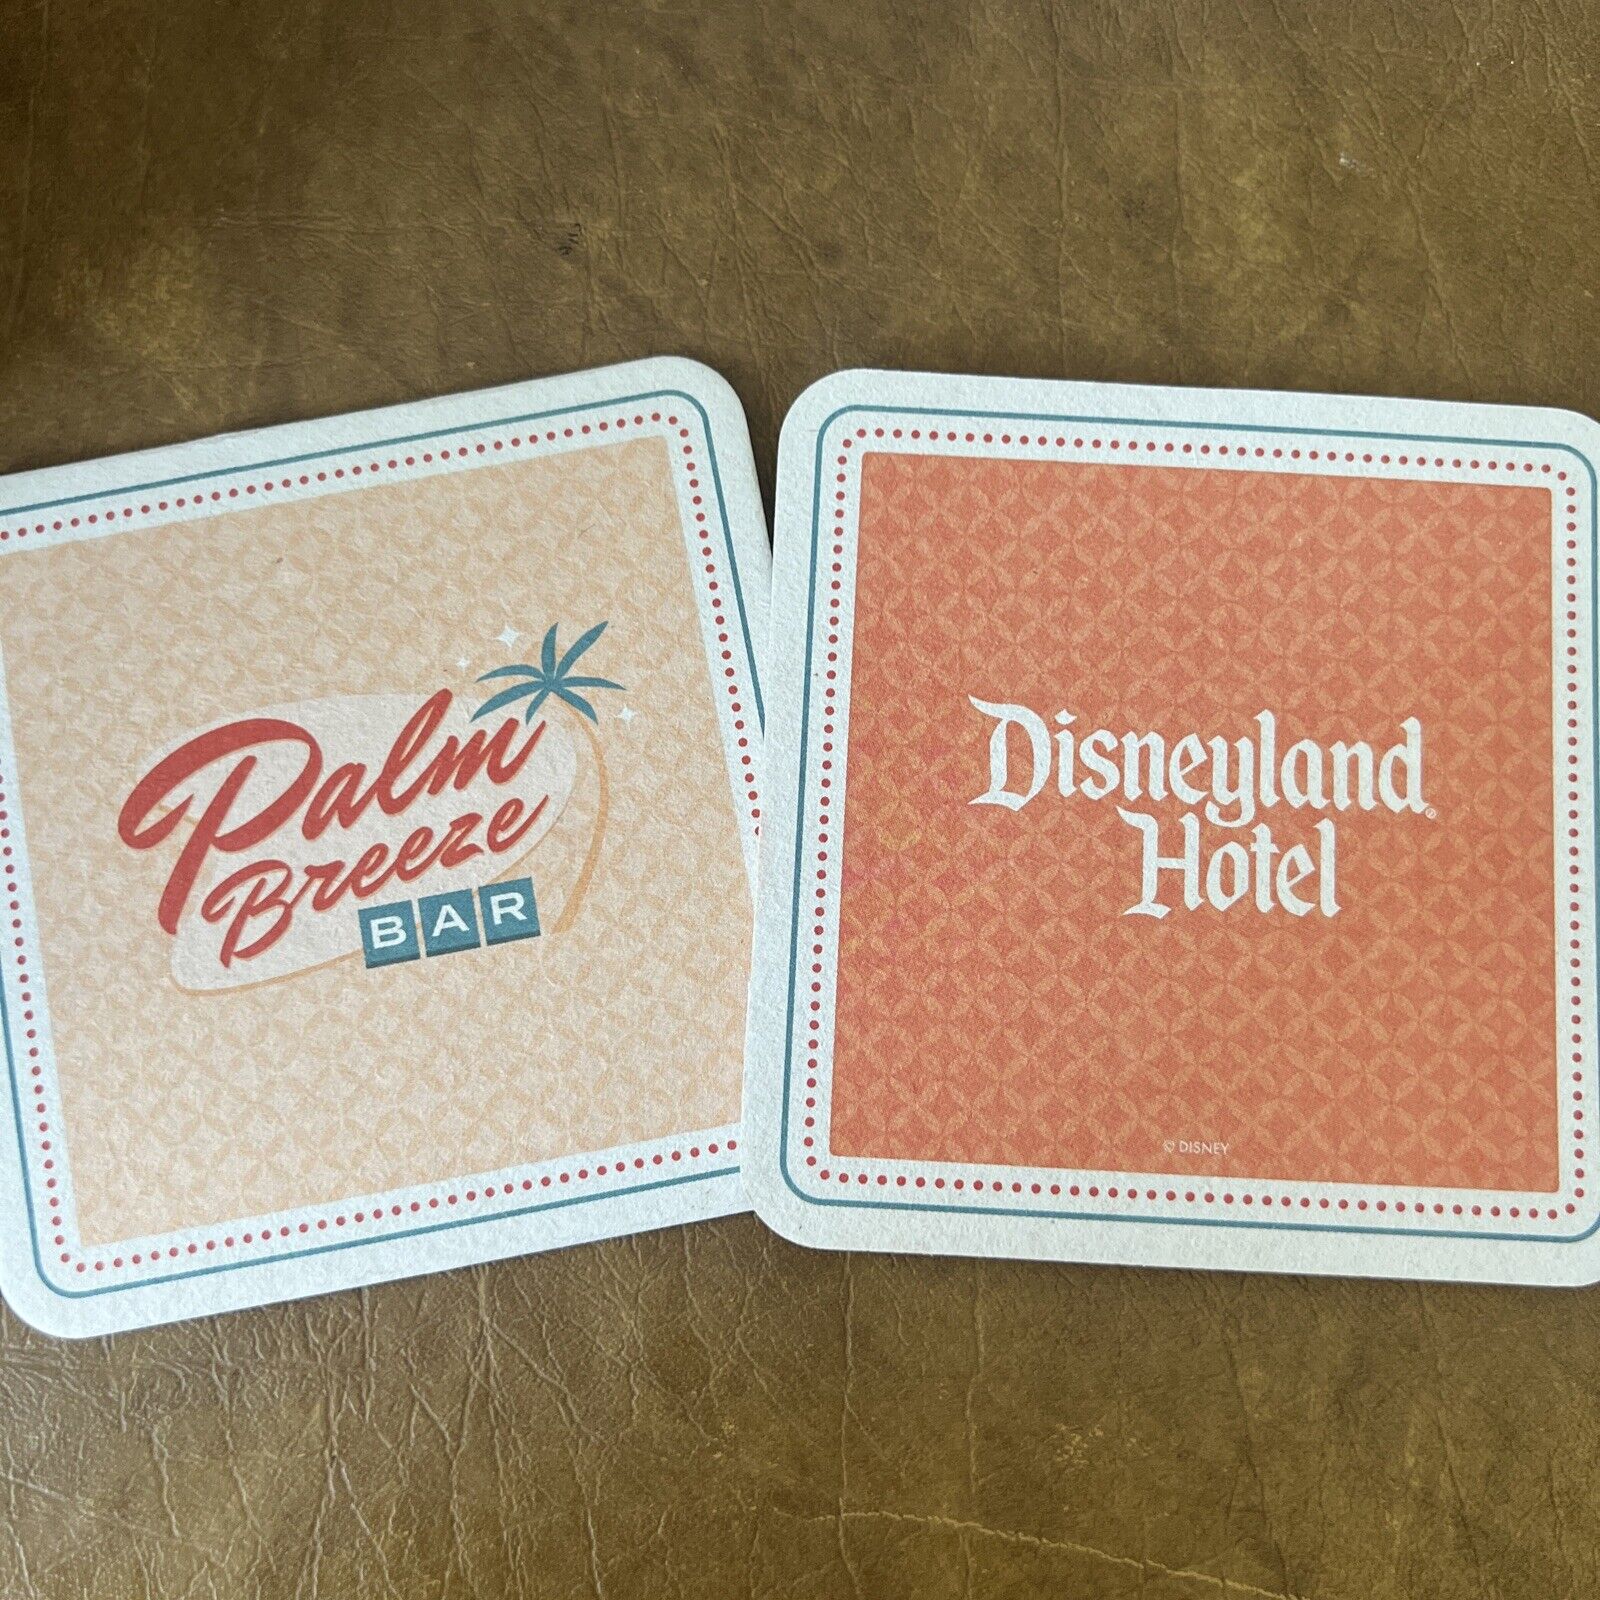 Disneyland Hotel - Discovery Tower DVC - Palm Breeze Bar 2 Cardboard Coasters